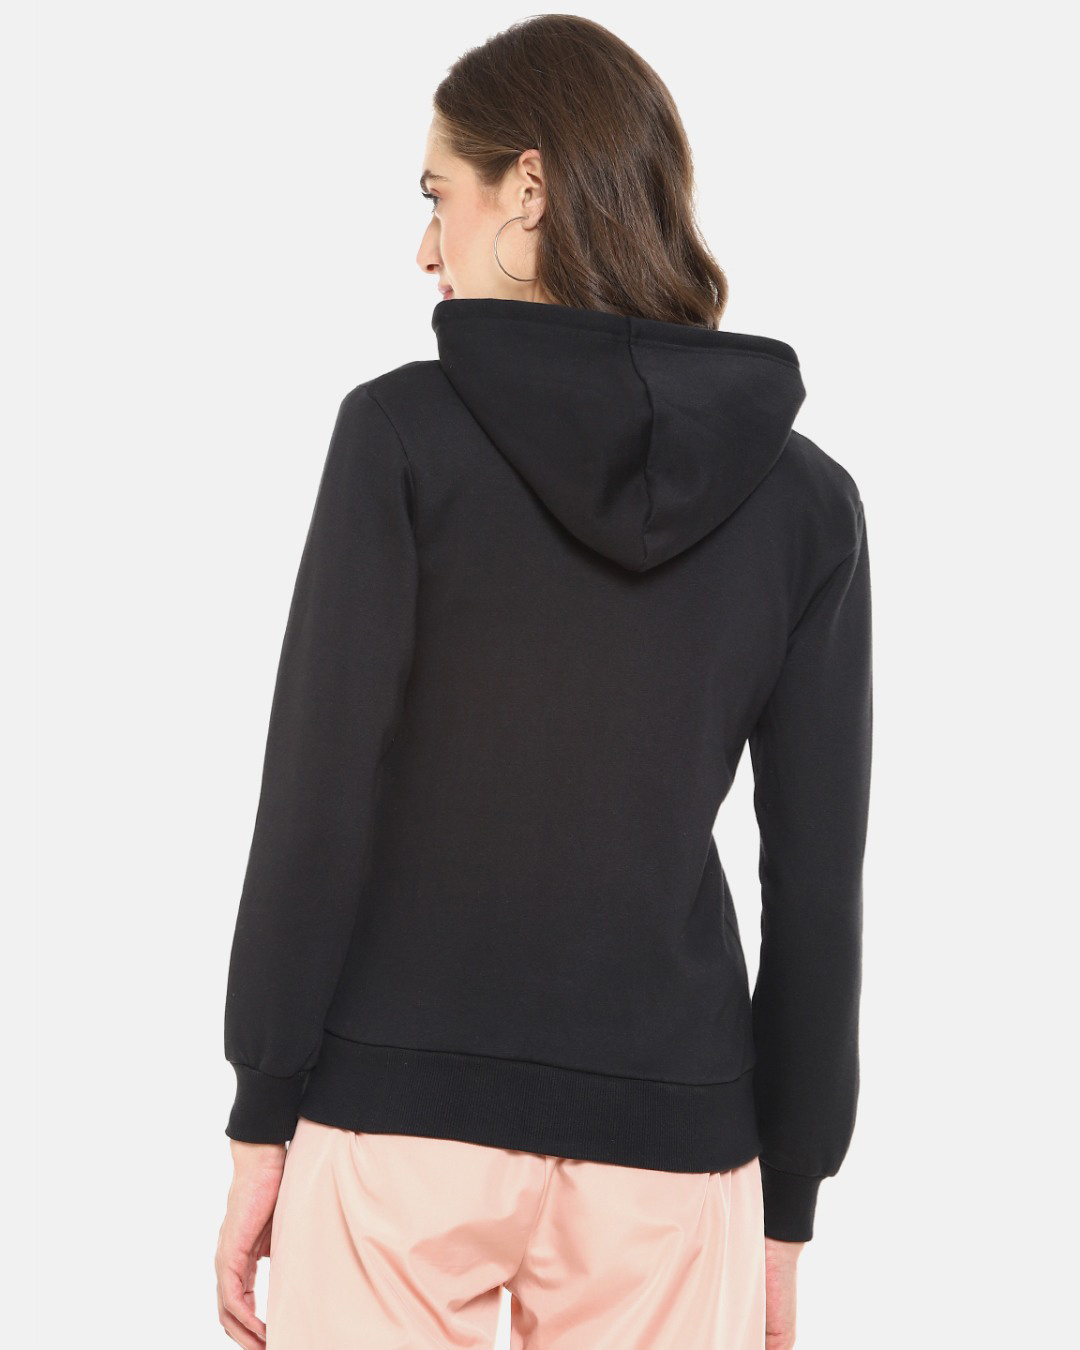 Shop Women's Black Solid Stylish Casual Zipper Hooded Sweatshirt-Back